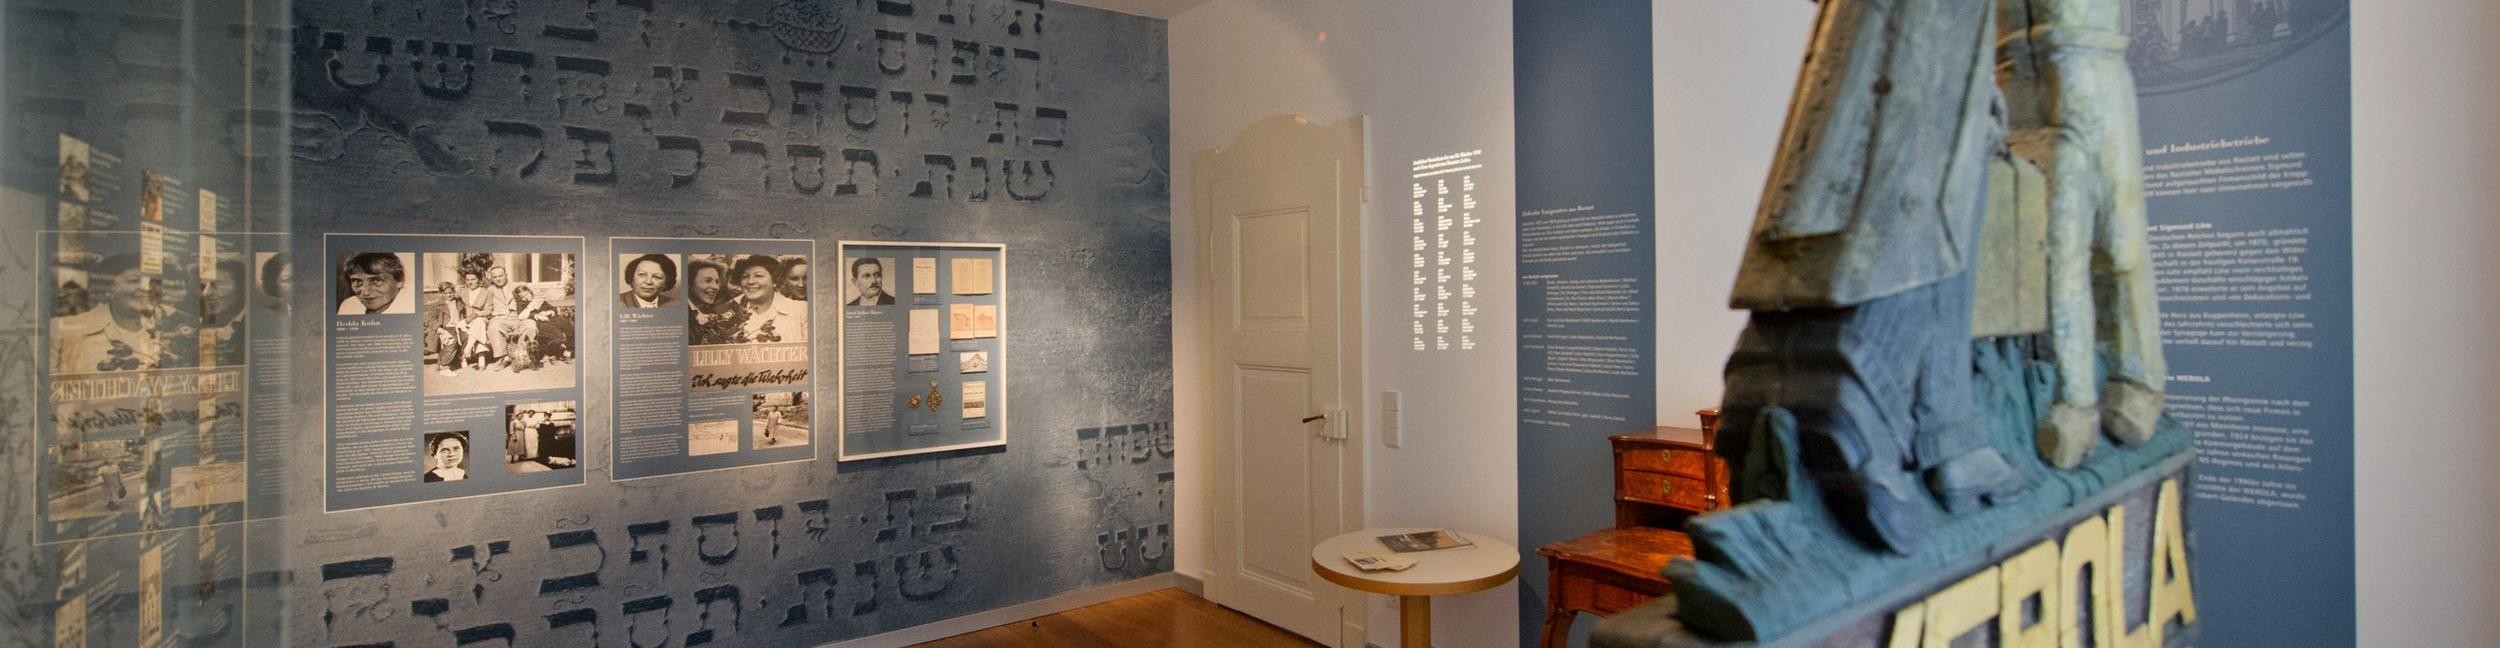 View into the documentation room on Jewish history in the Kantorenhaus Rastatt,